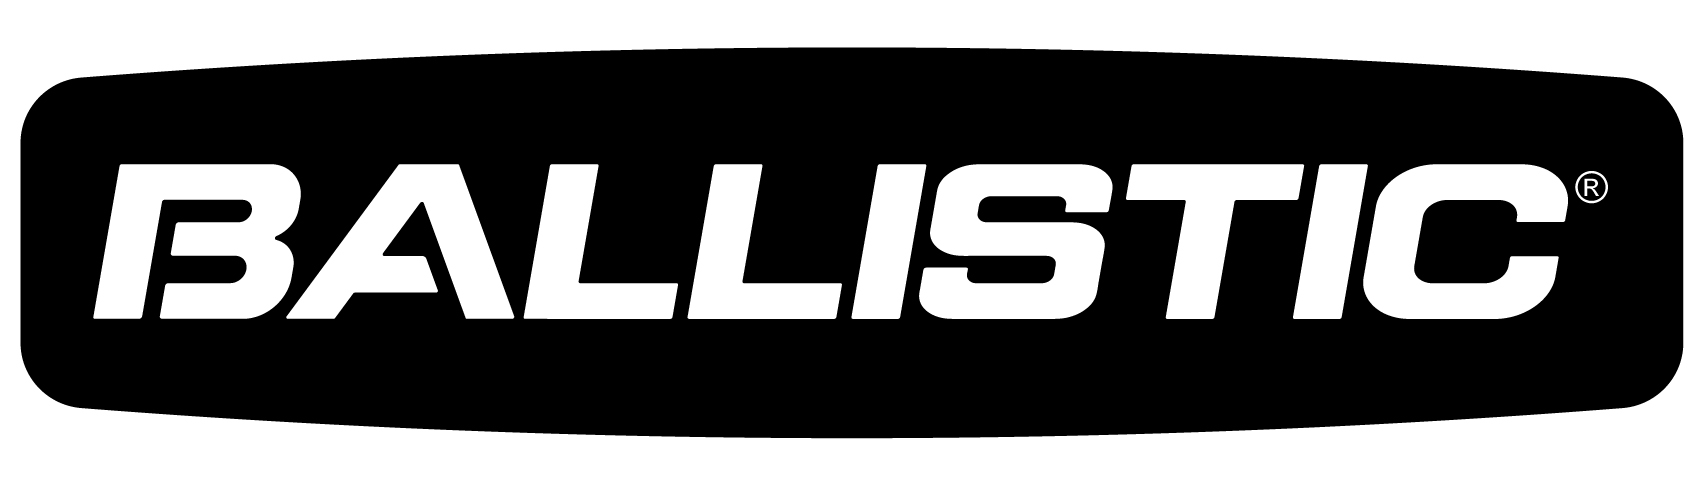 Ballistic Logo photo - 1